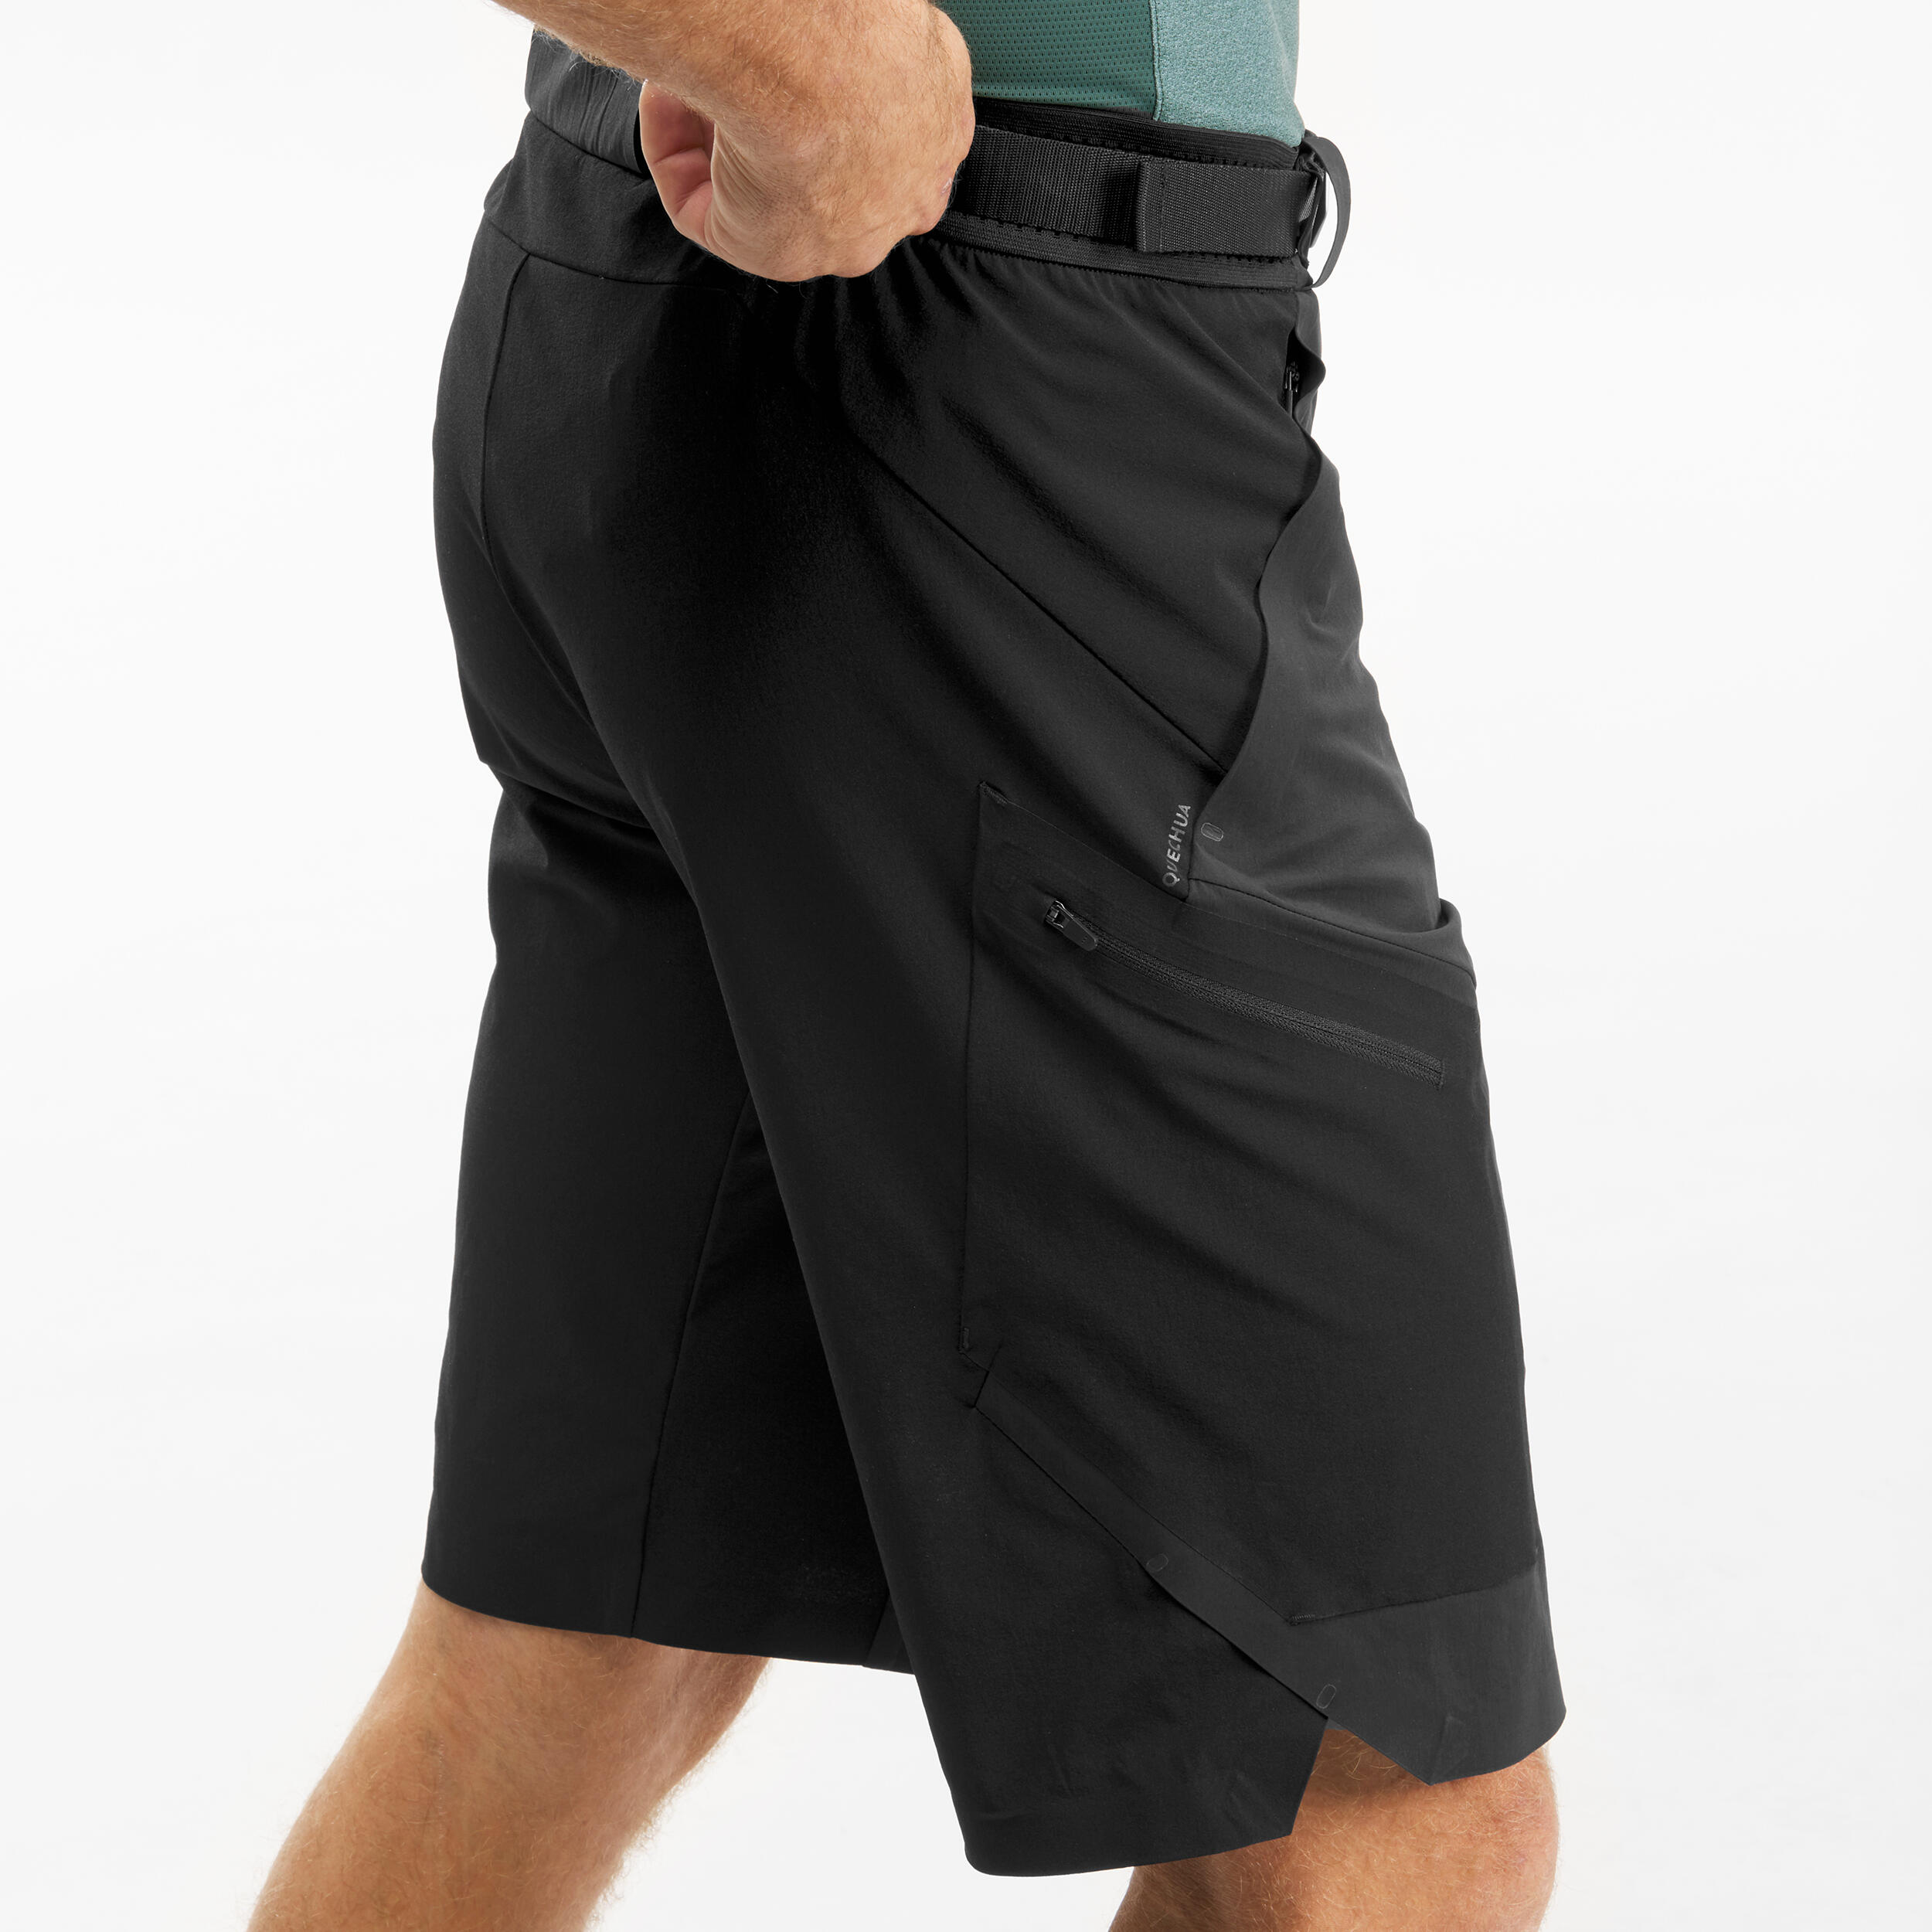 Men's Hiking Long Shorts - MH500 4/5